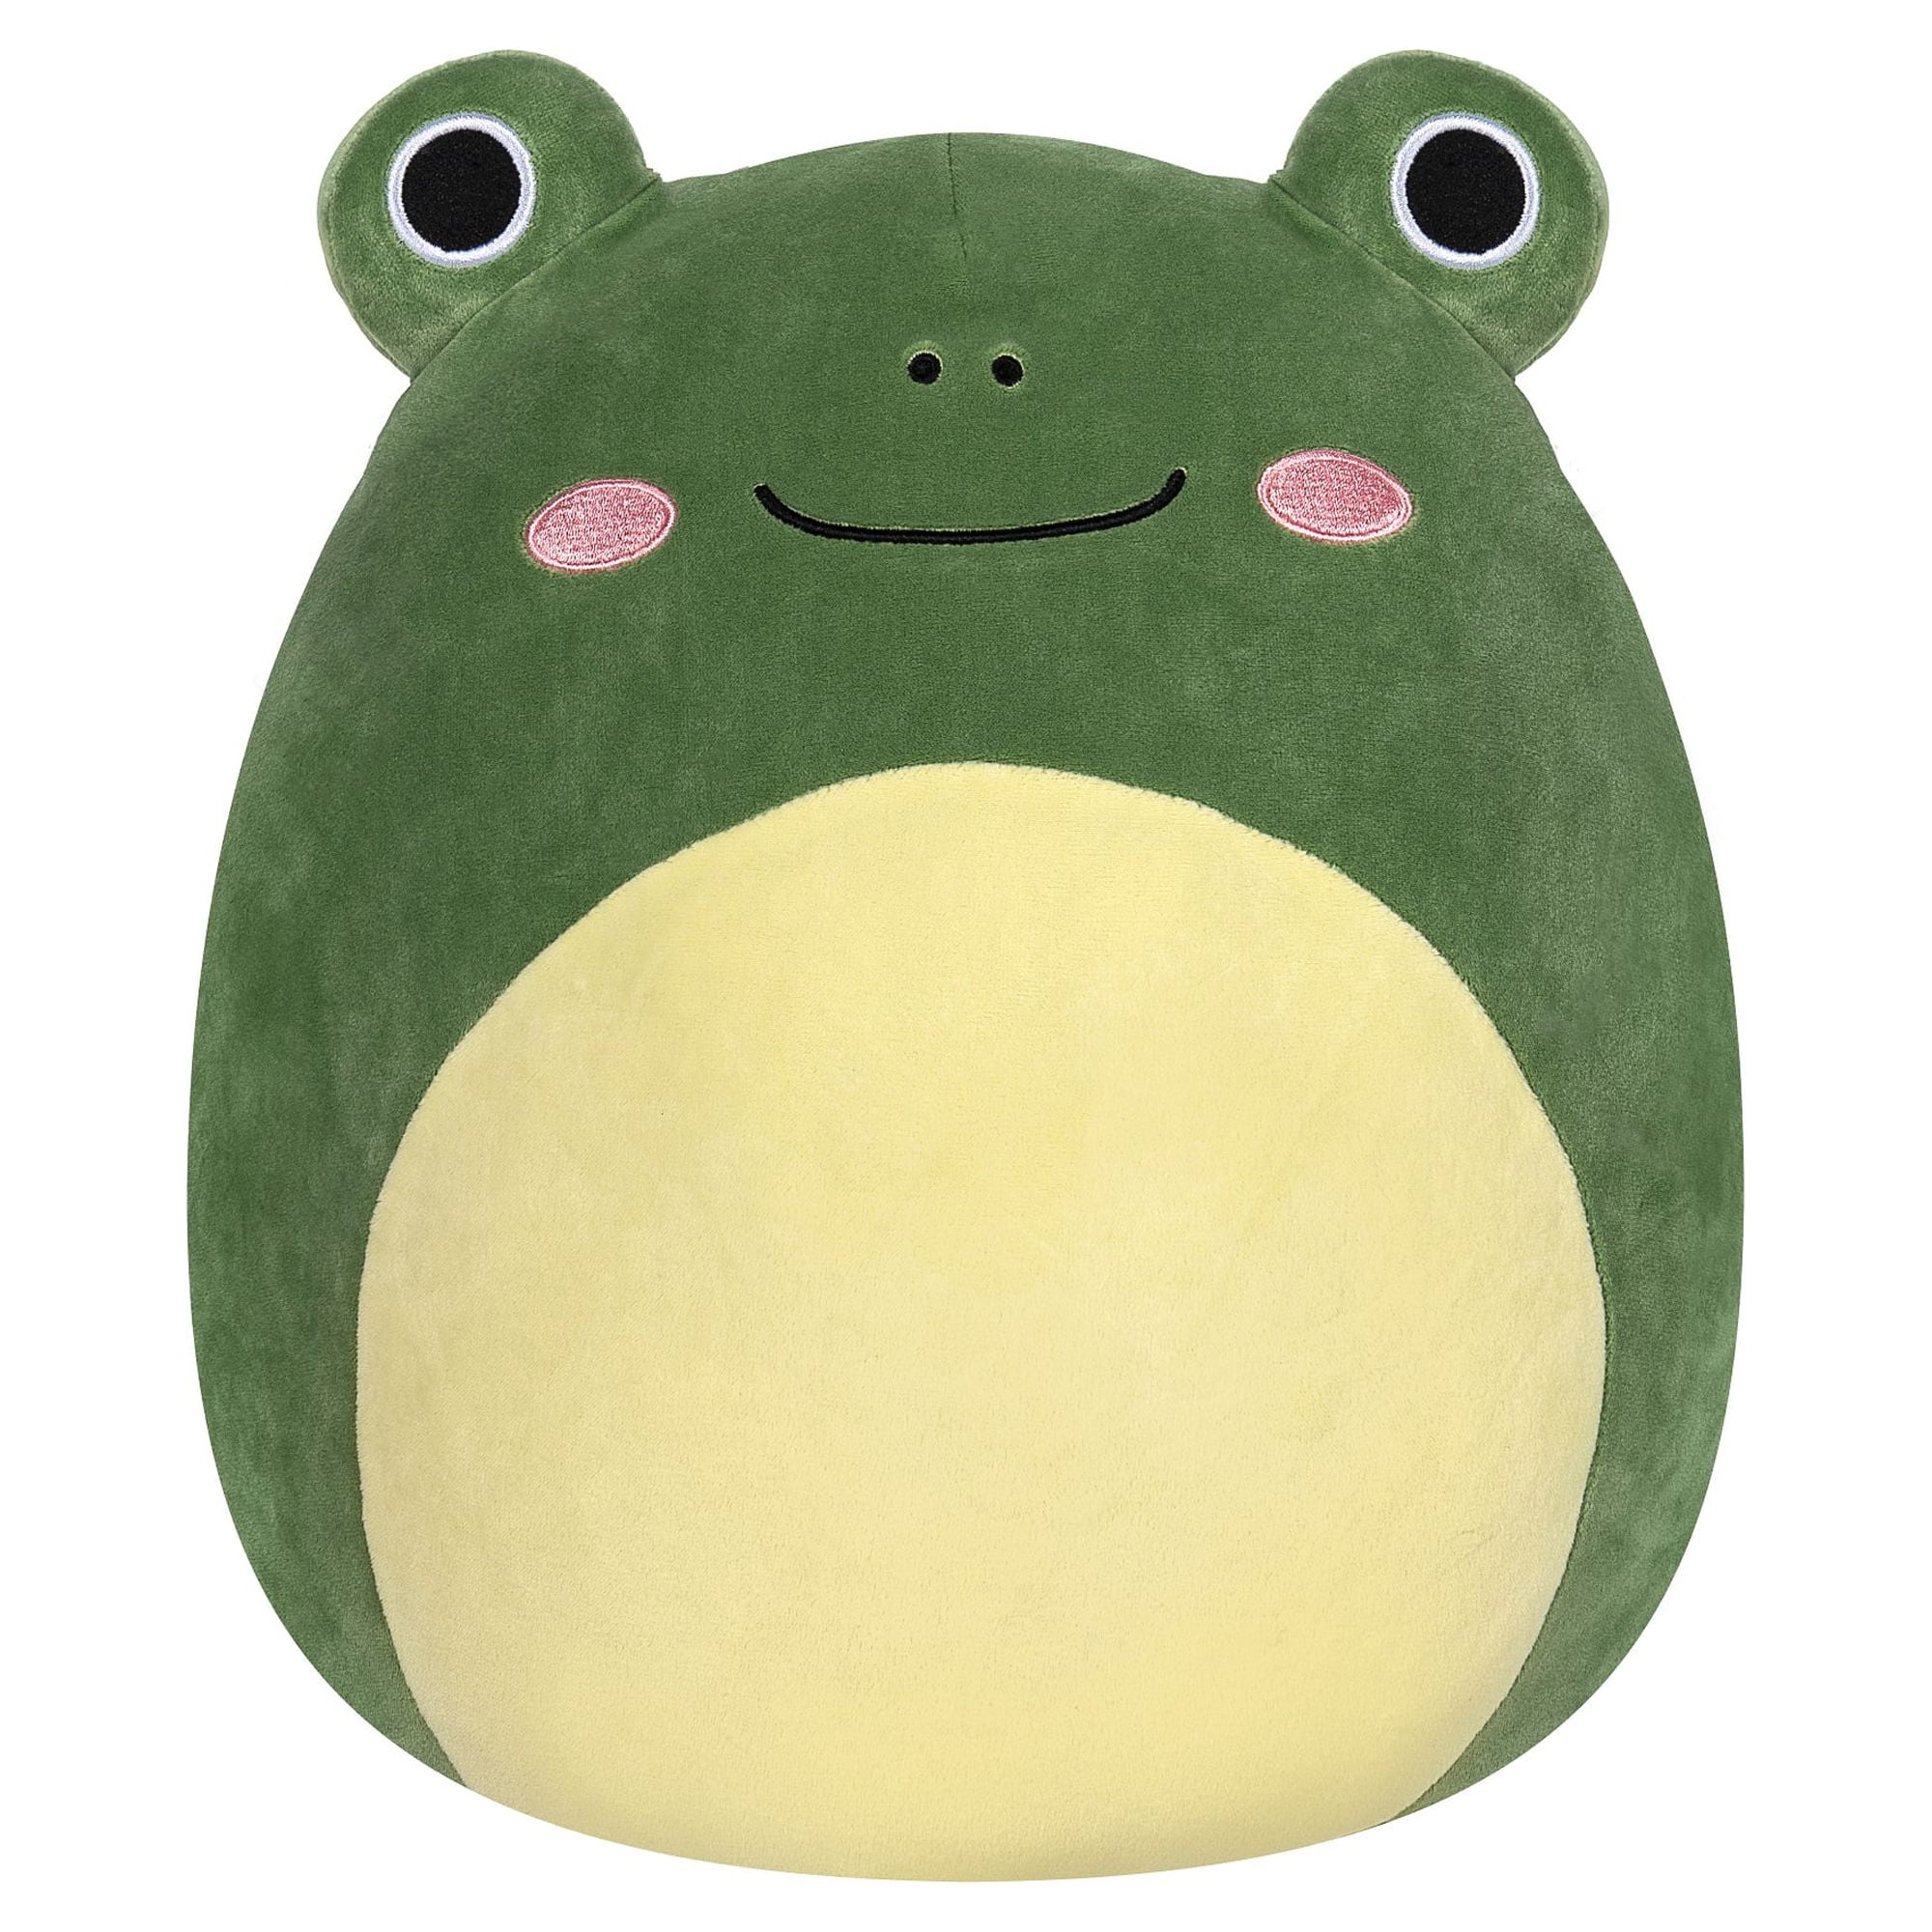 Squishmallows Frog Gloria The Stuffed Animal Plush Toy - 14 in